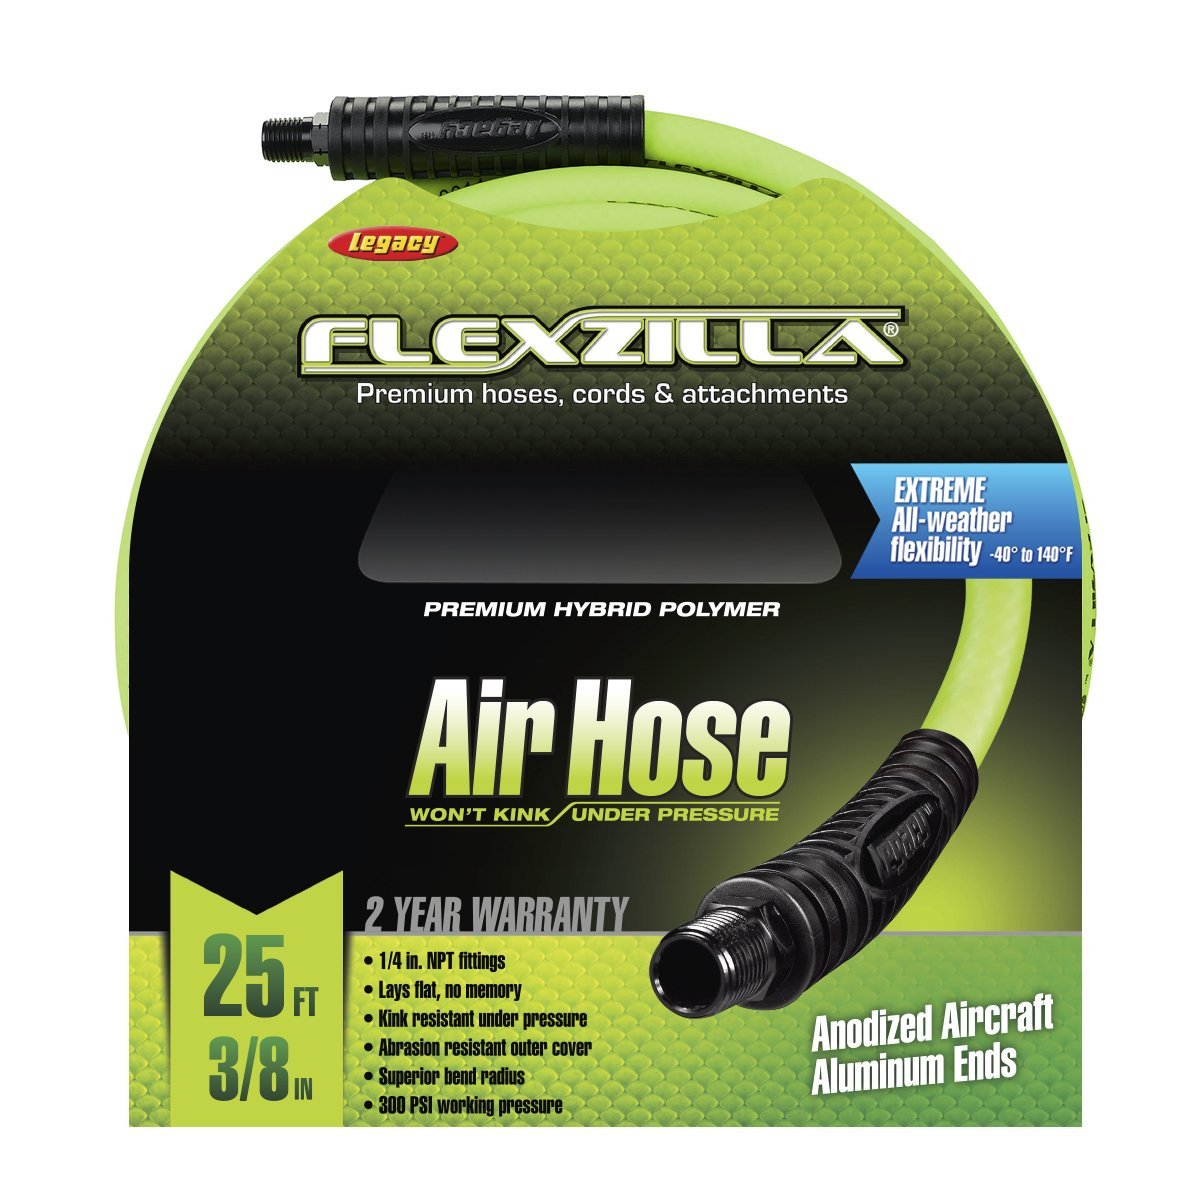 Flexzilla Air Hose 3/8 X 25' 300 PSI Kink Free Legacy Neon Green